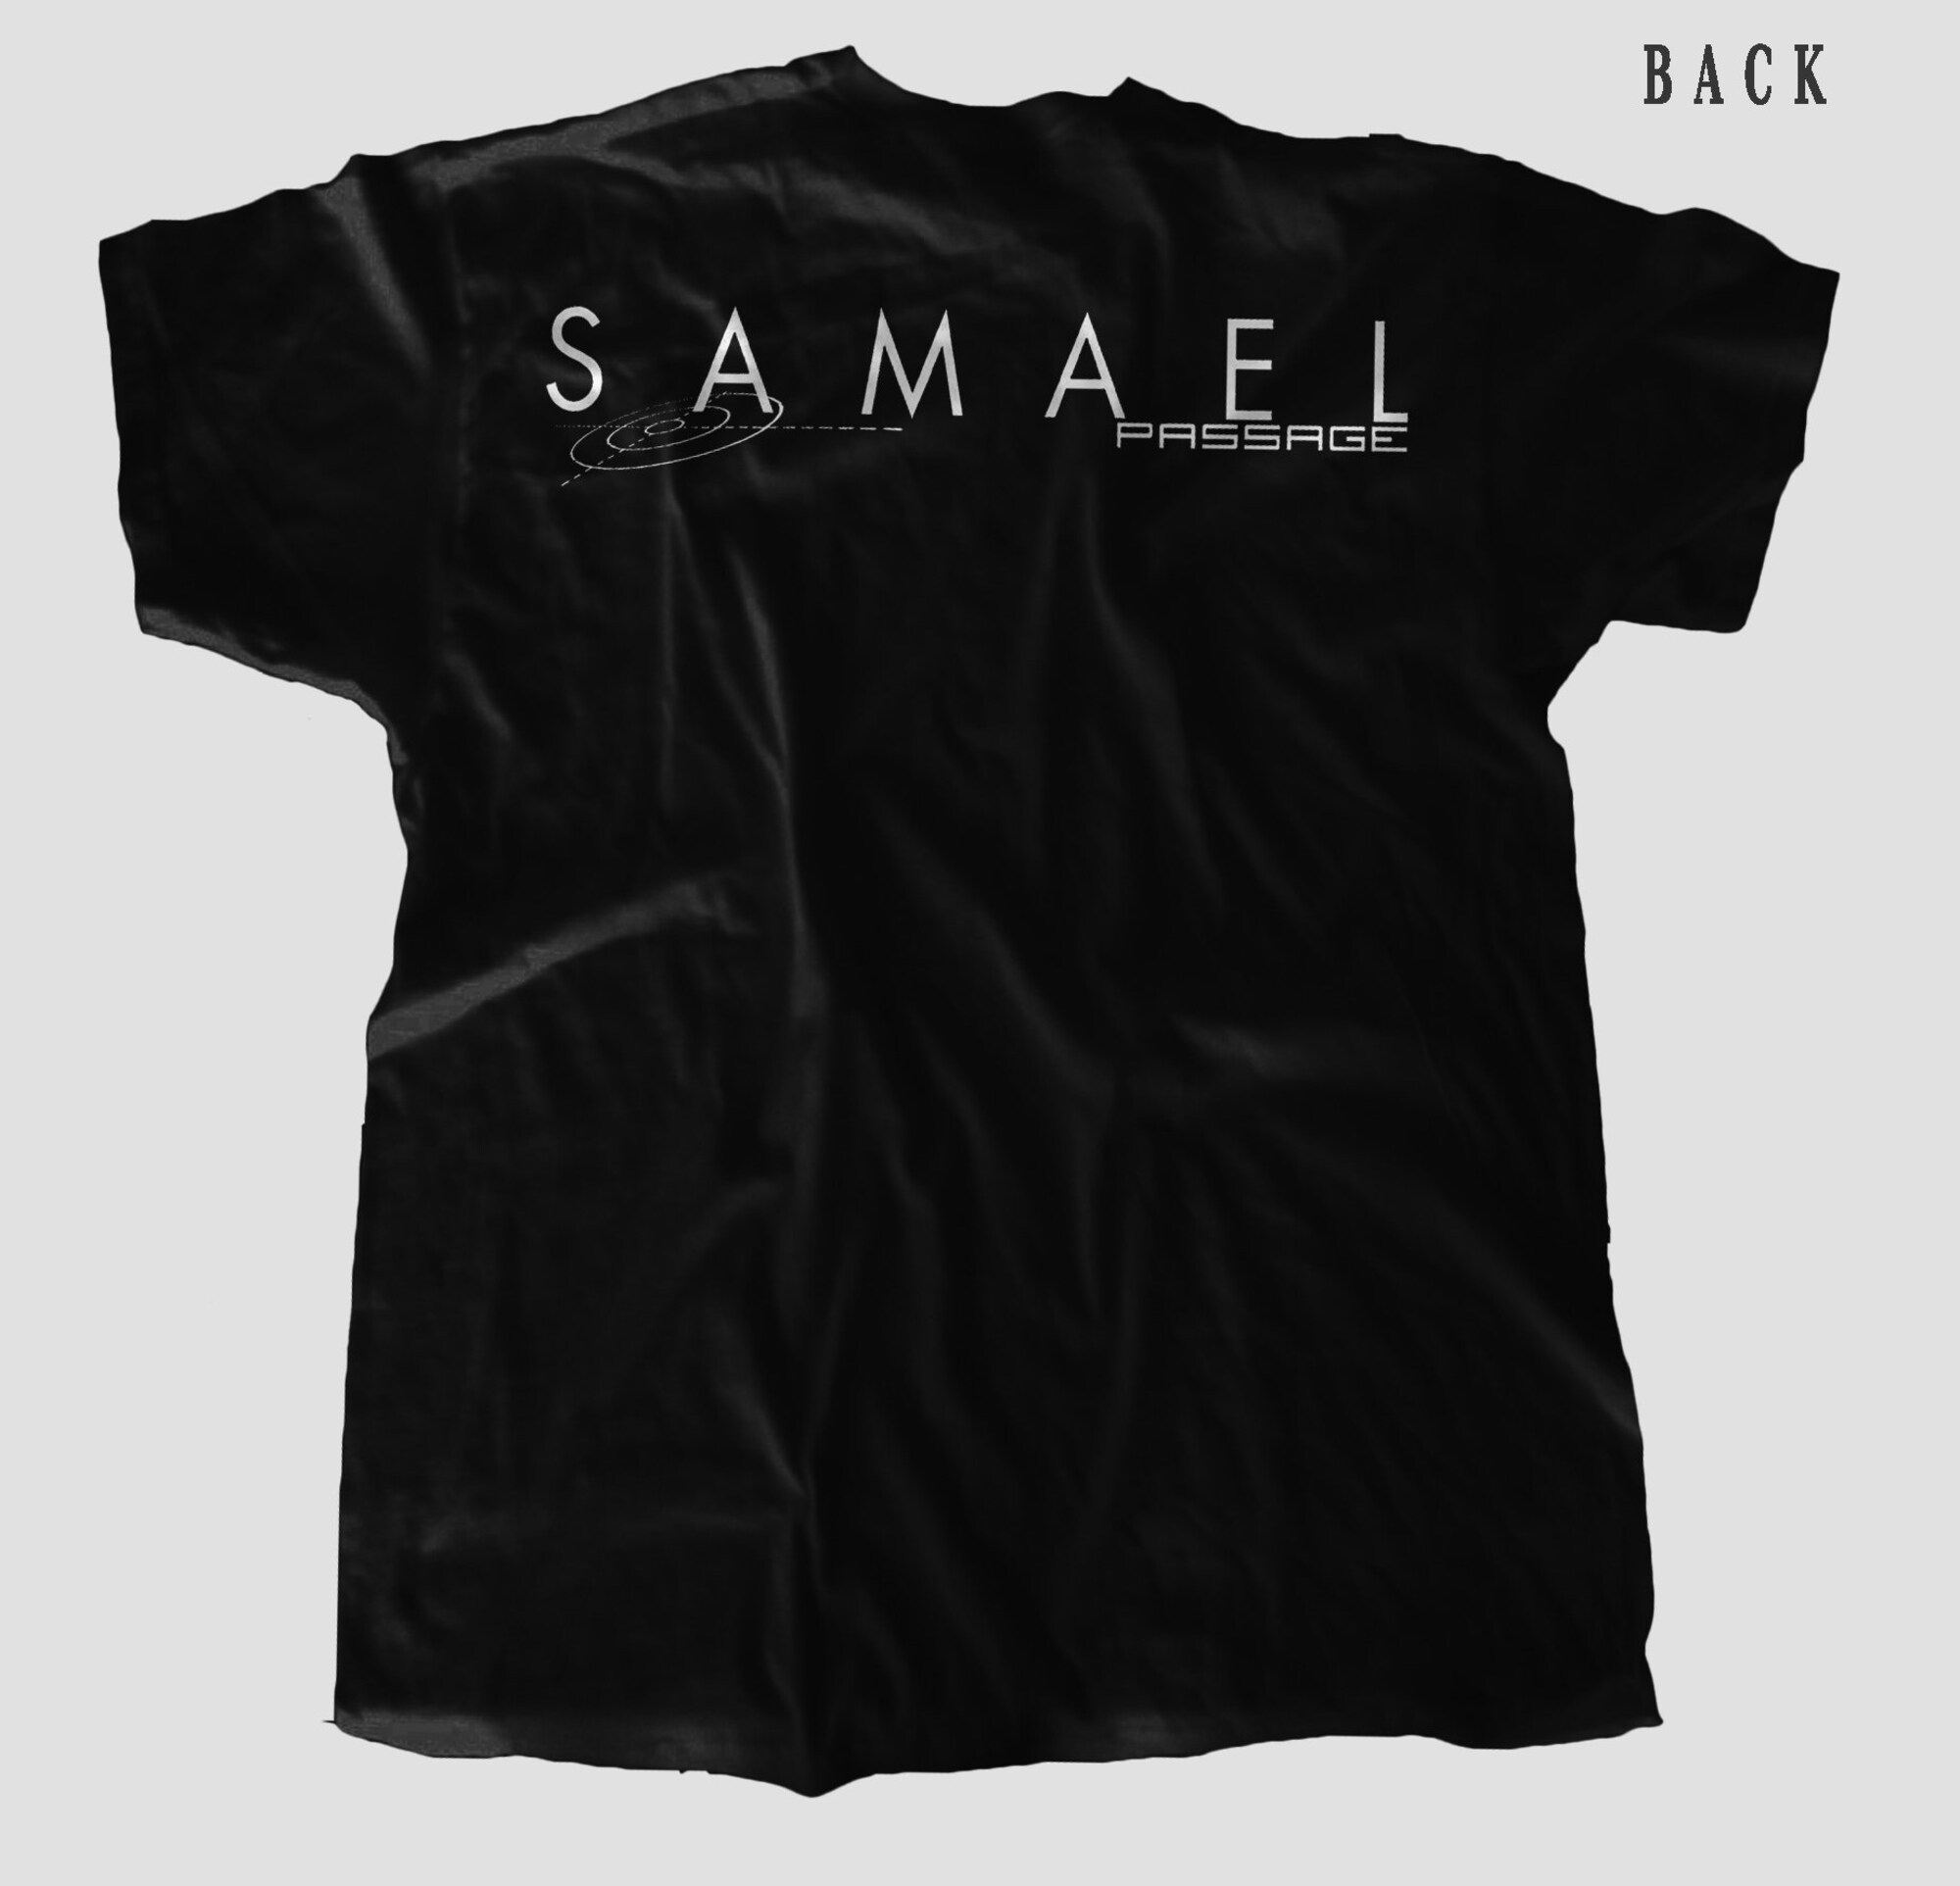 SAMAEL-Passage T-shirt